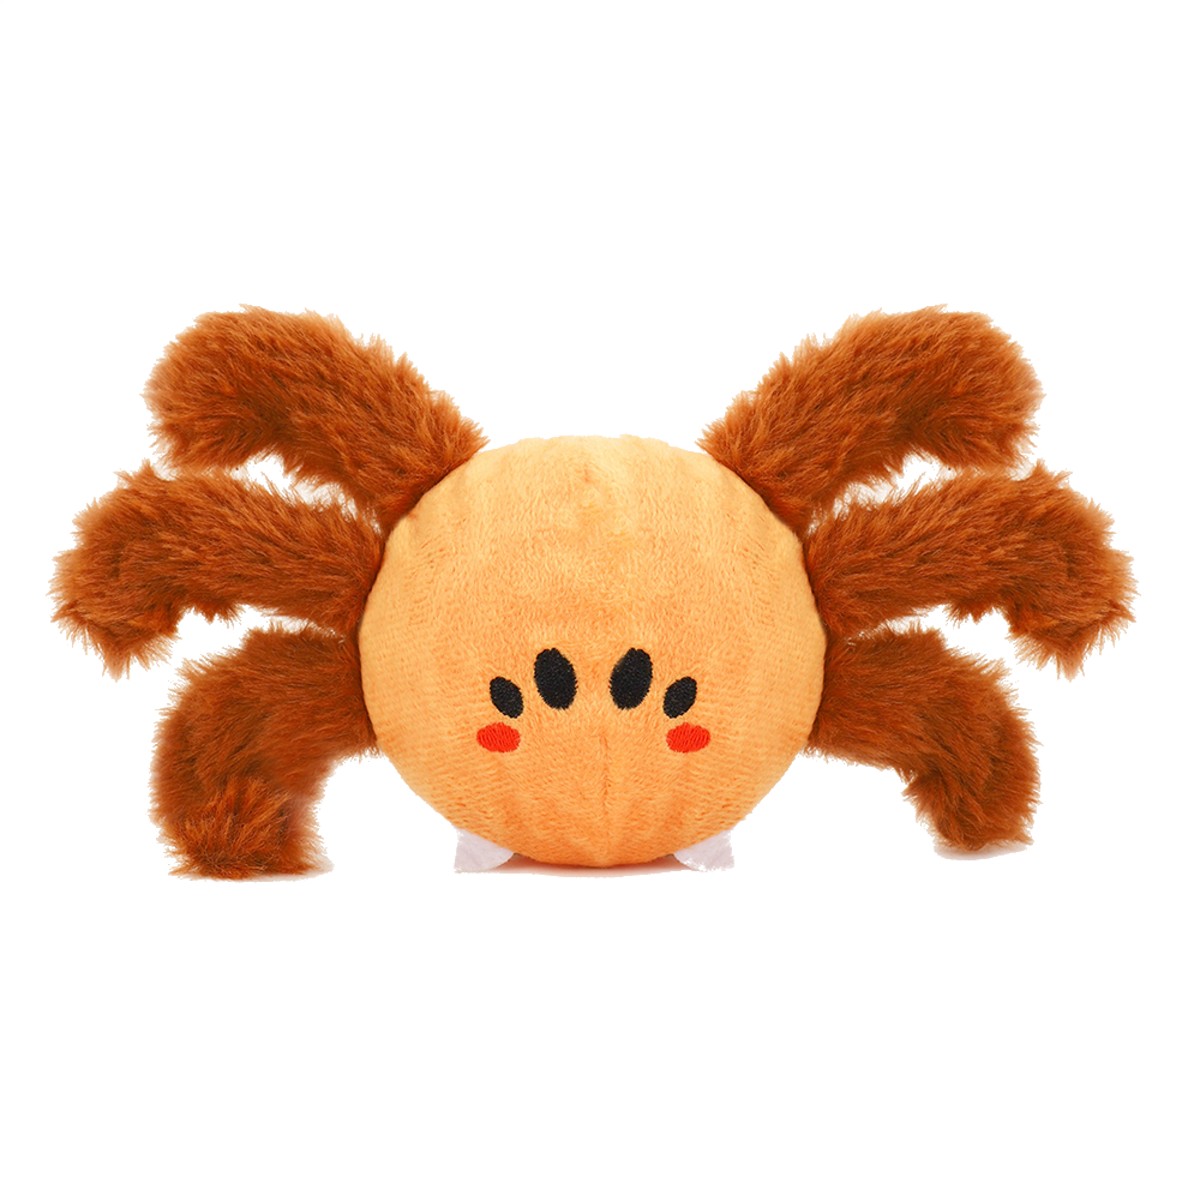 HugSmart Howloween Night Ball Dog Toy - Spider